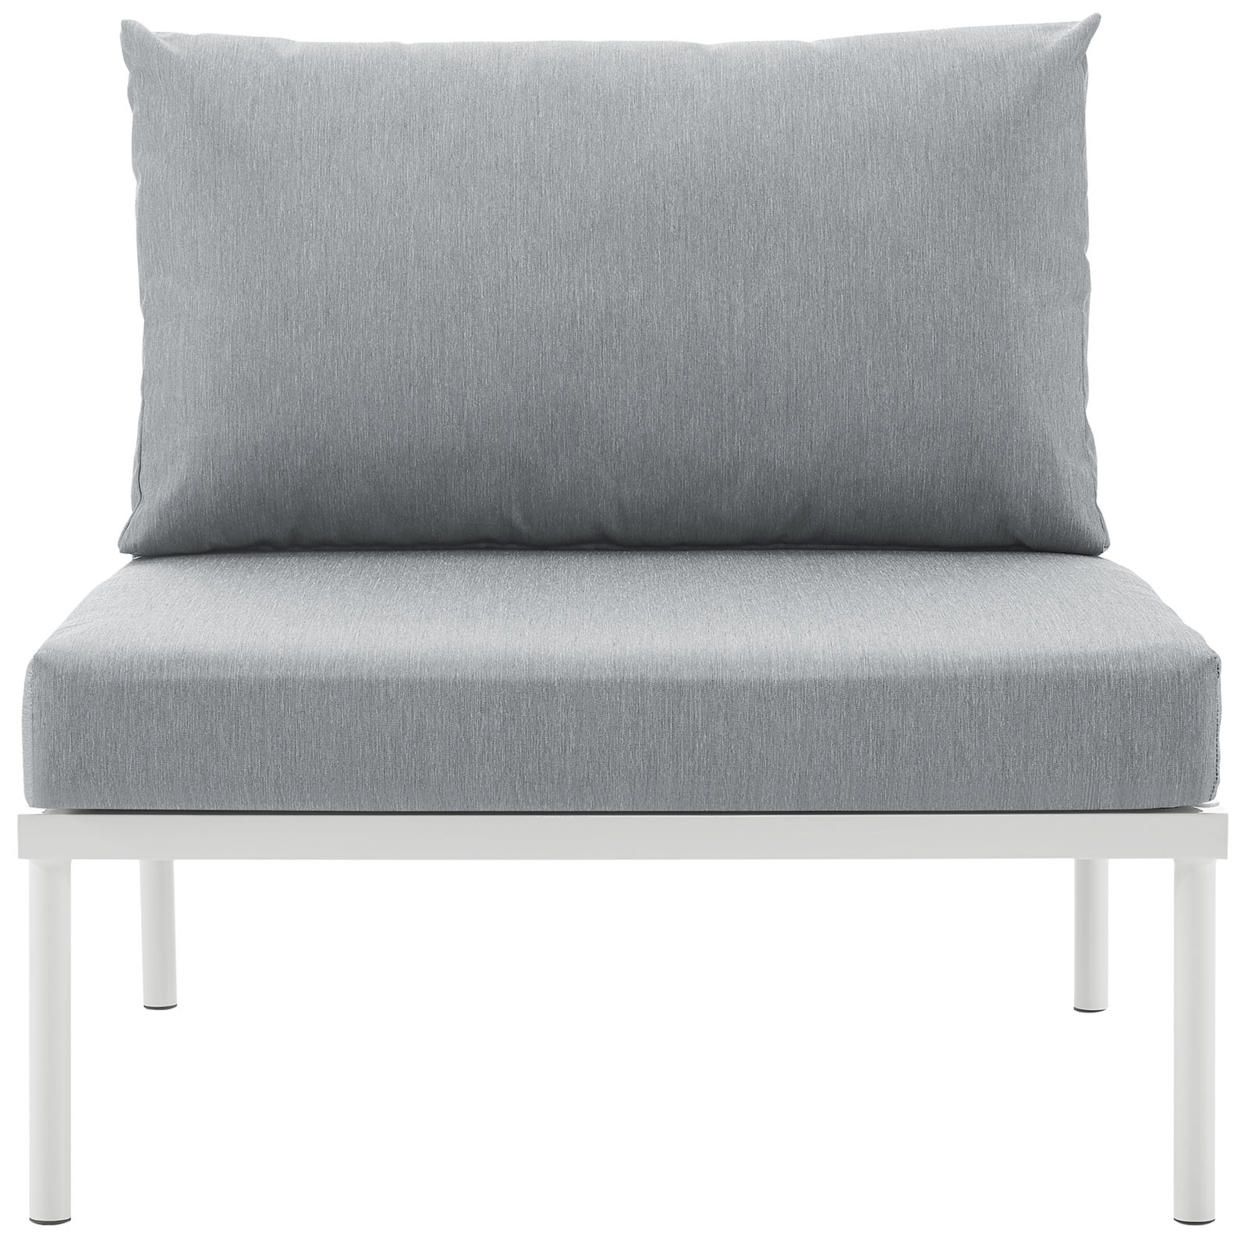 Harmony Armless Outdoor Patio Aluminum Chair White Gray - image 4 of 5